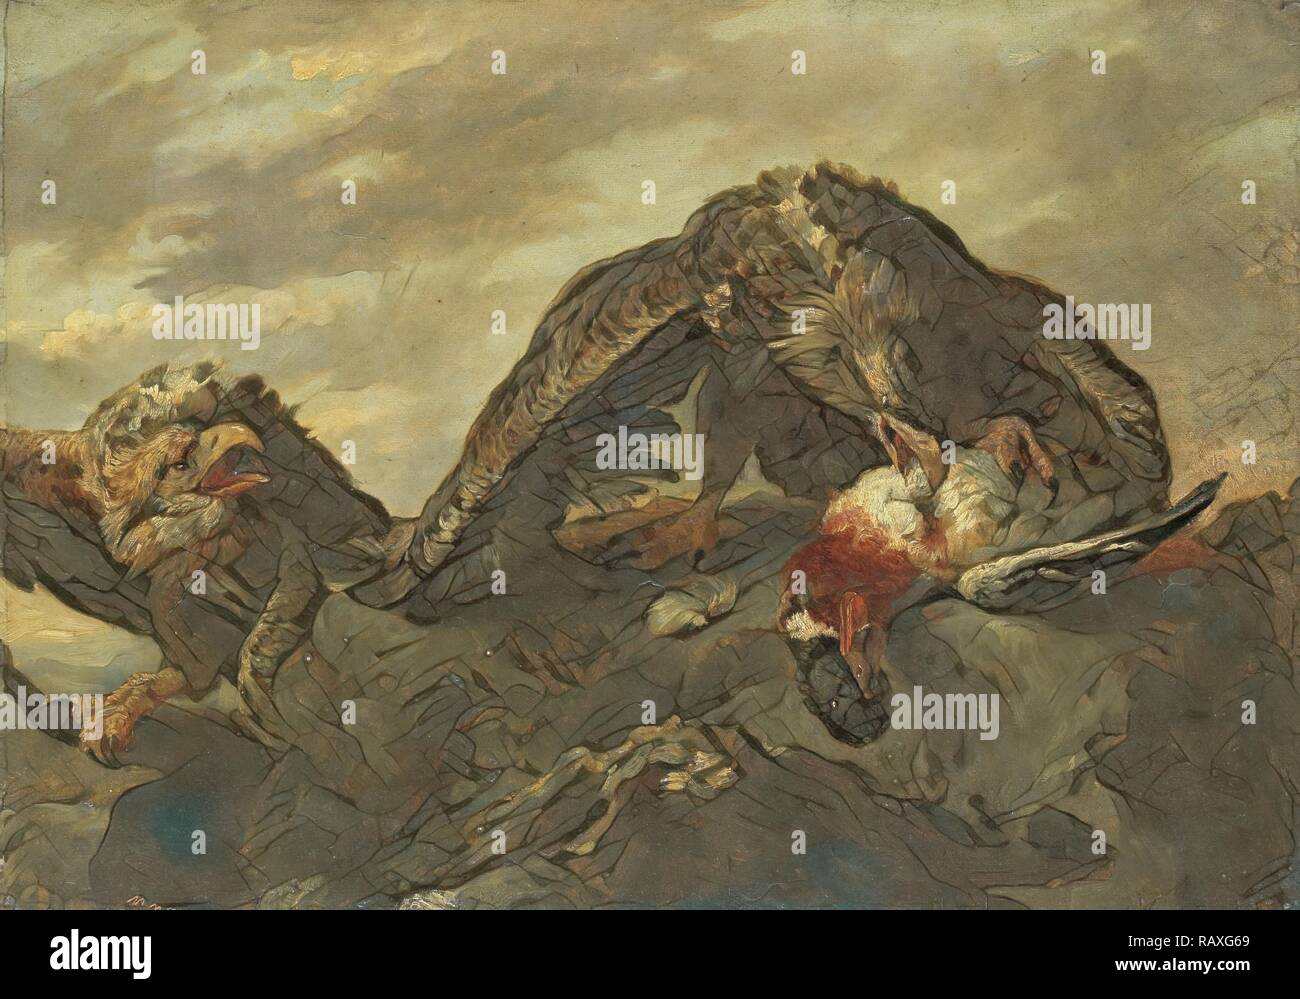 Águilas en rocas, Matthijs Maris, 1857. Reimagined by Gibon. Arte clásico  con un toque moderno reinventado Fotografía de stock - Alamy